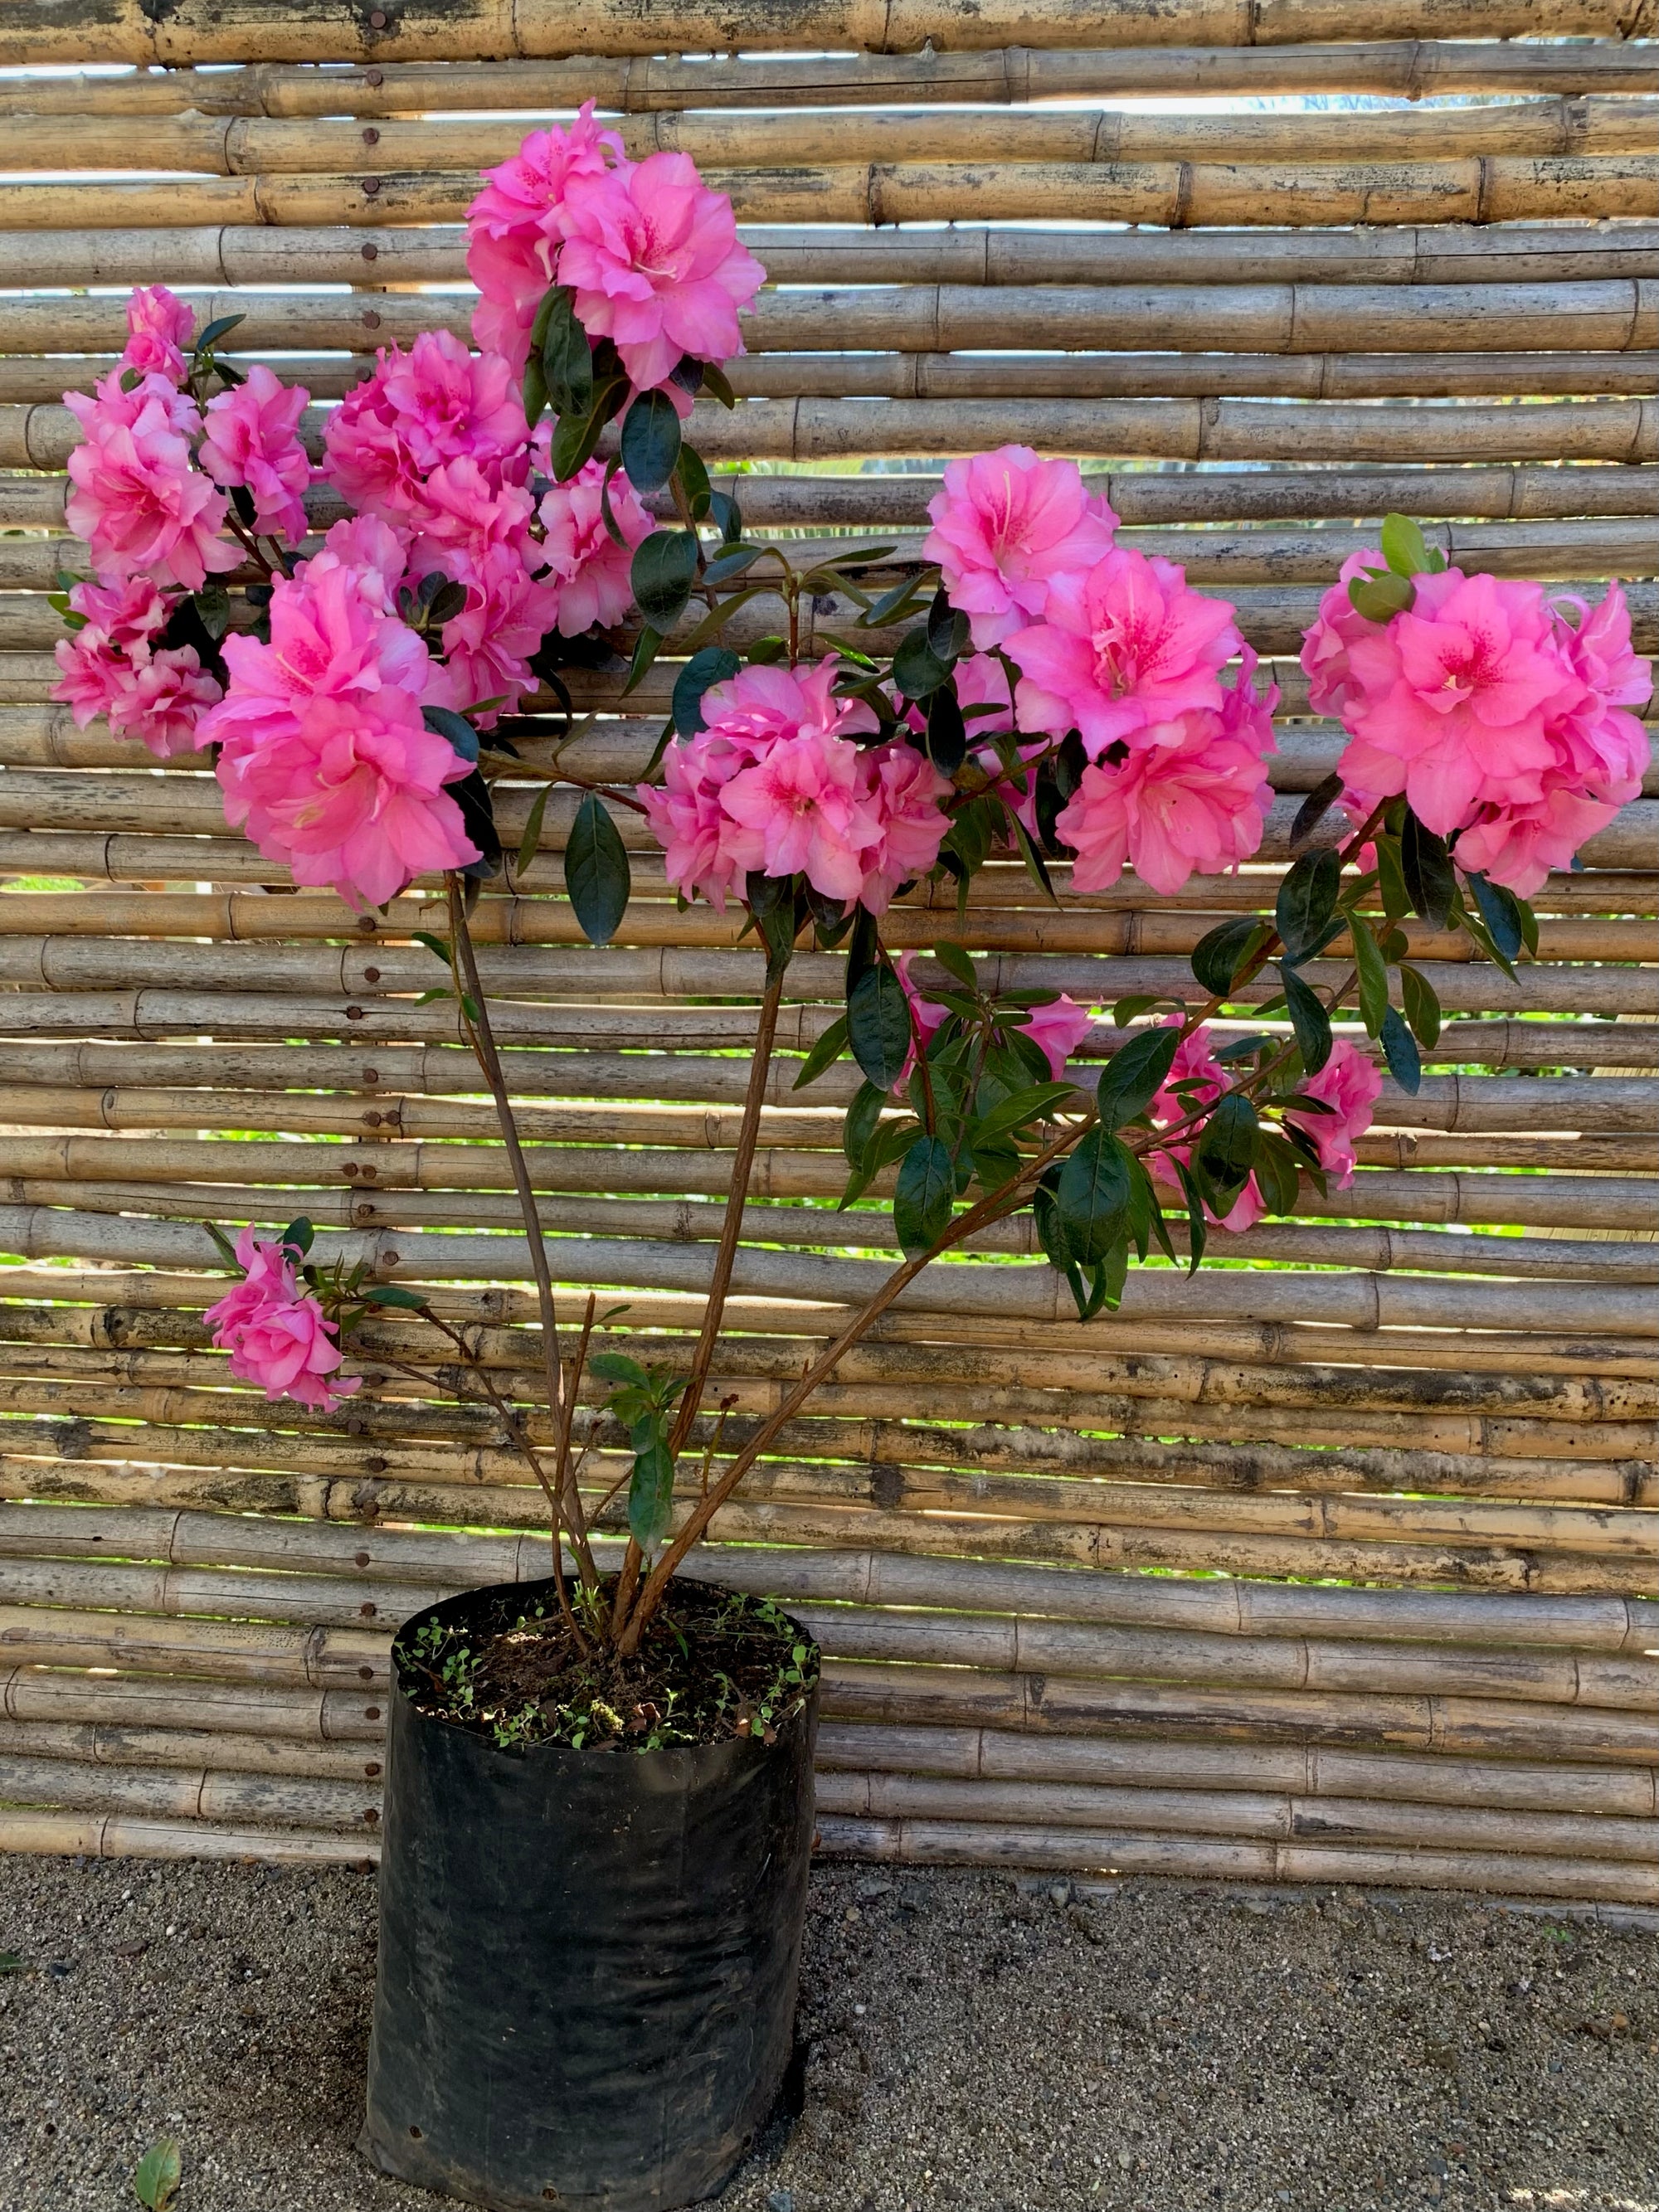 Azalea (60 - 80cm) - Rhododendron indicum